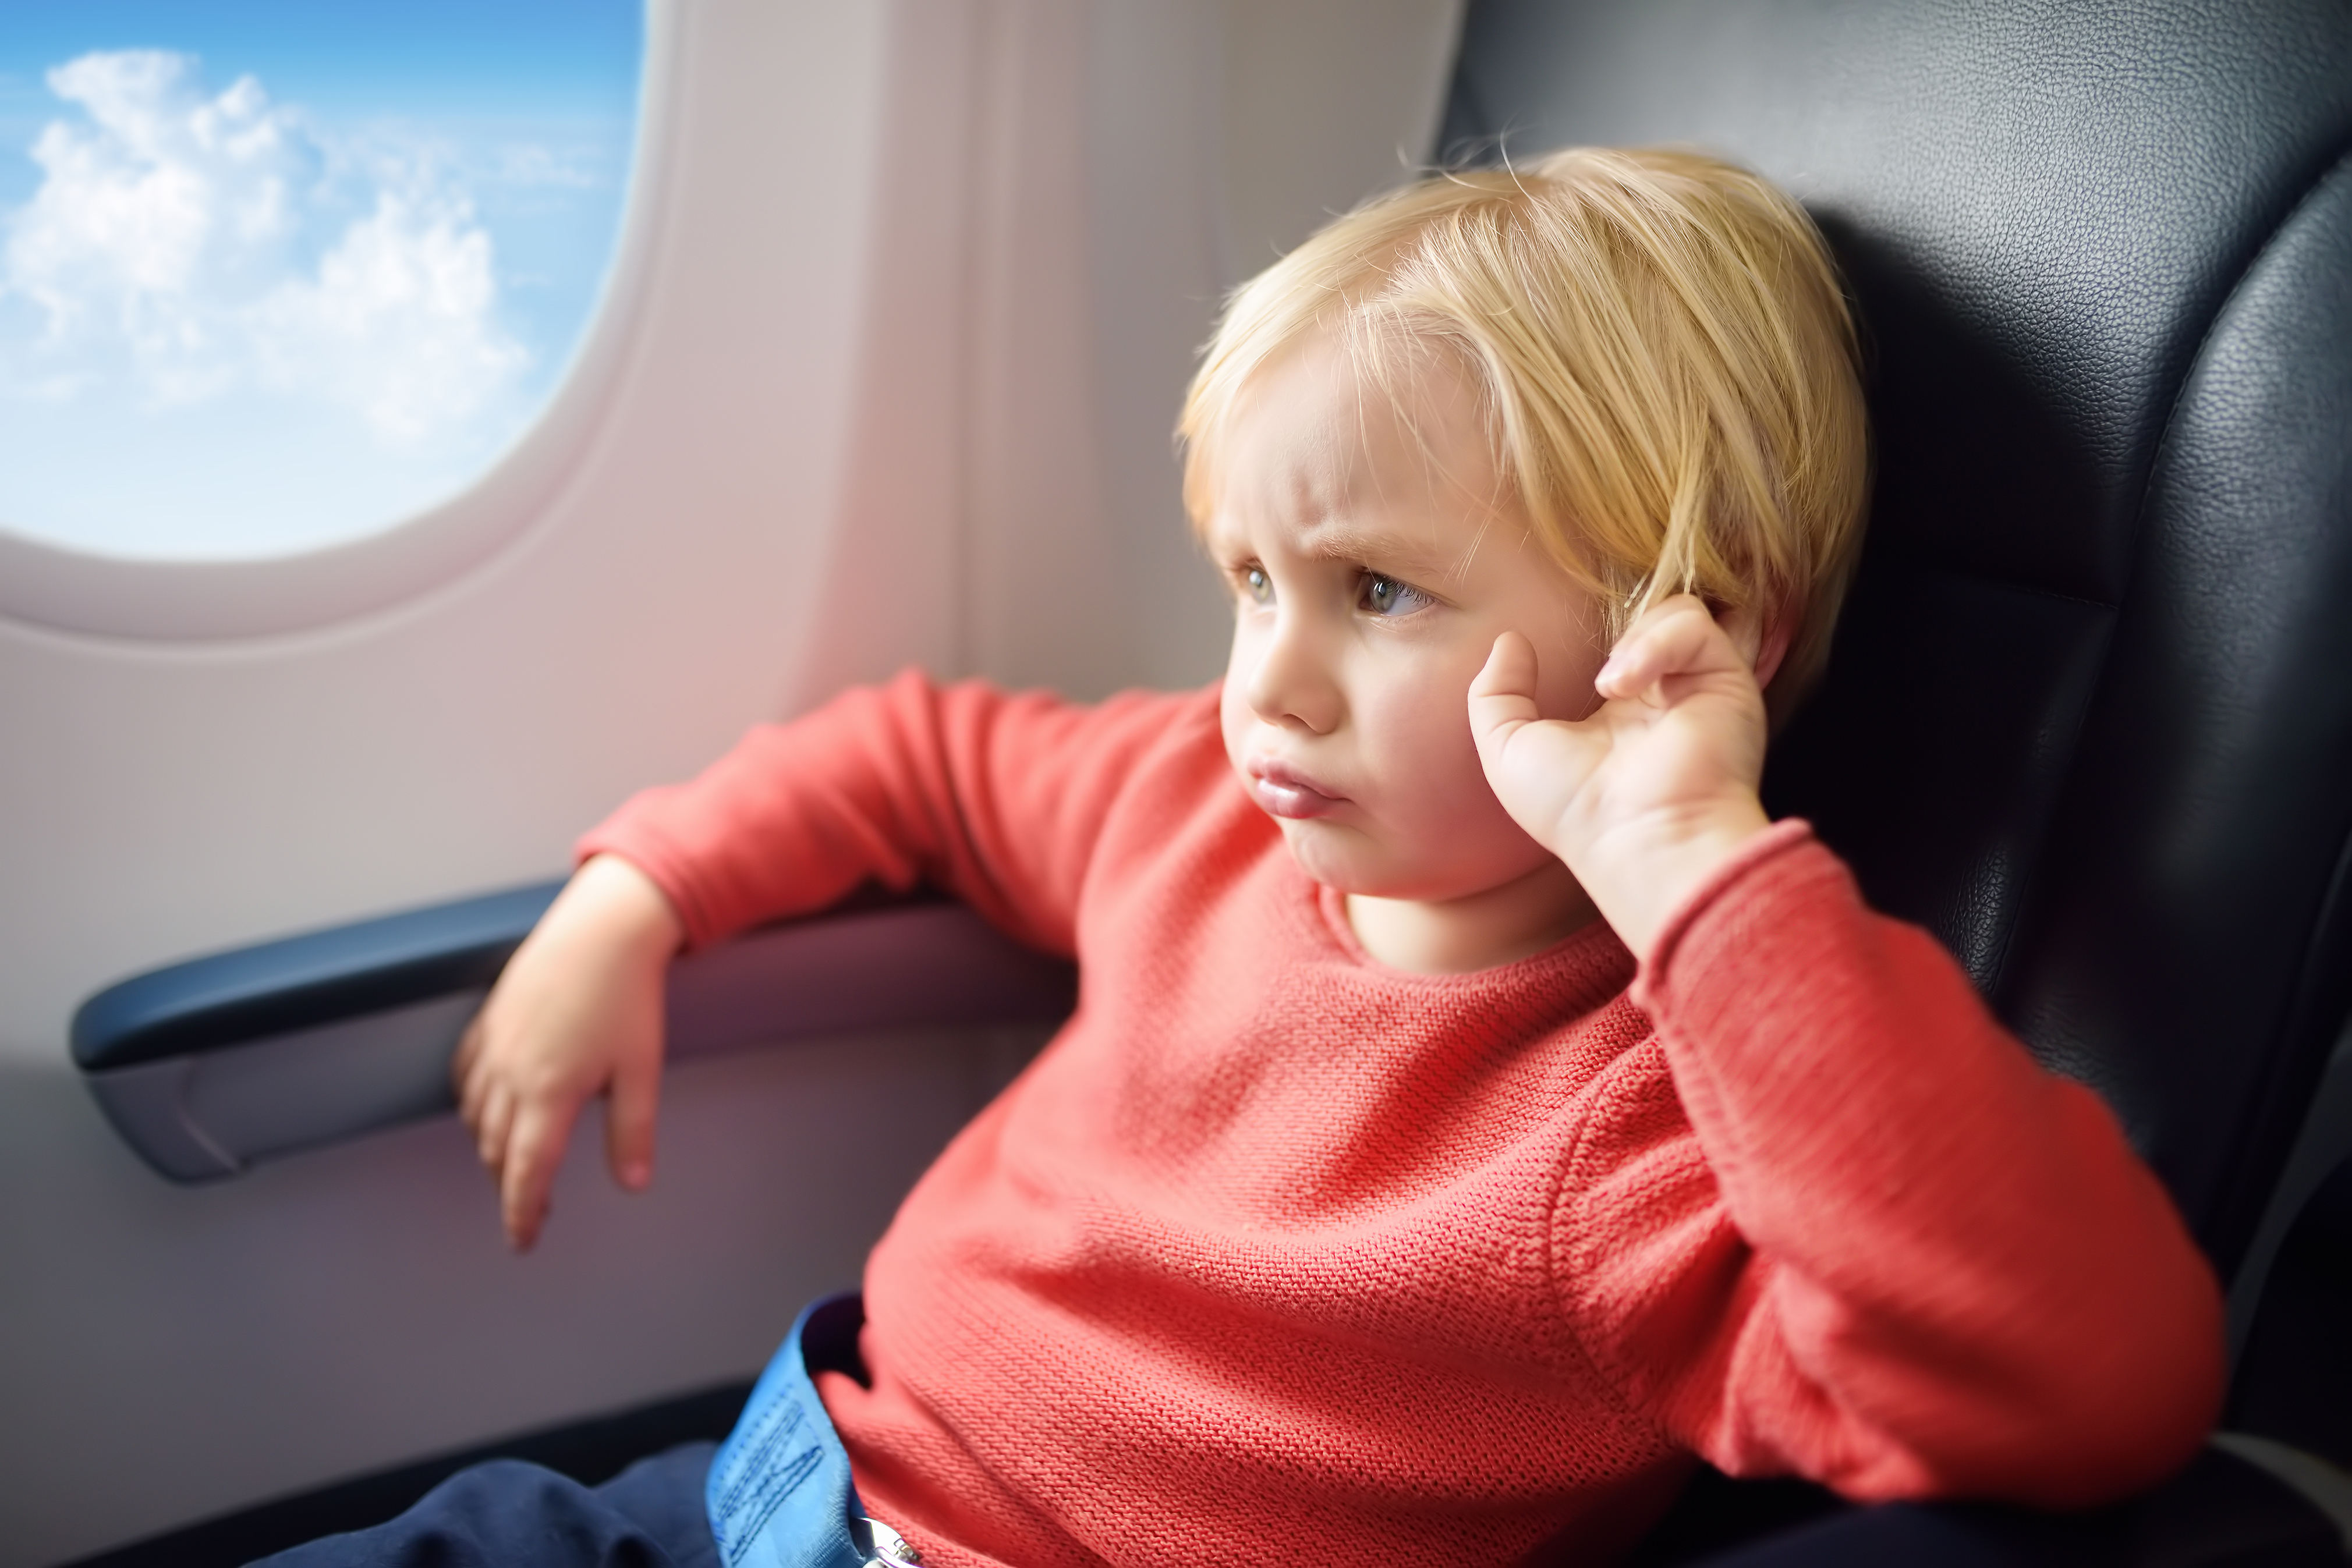 An upset child on an airplane | Source: Shutterstock